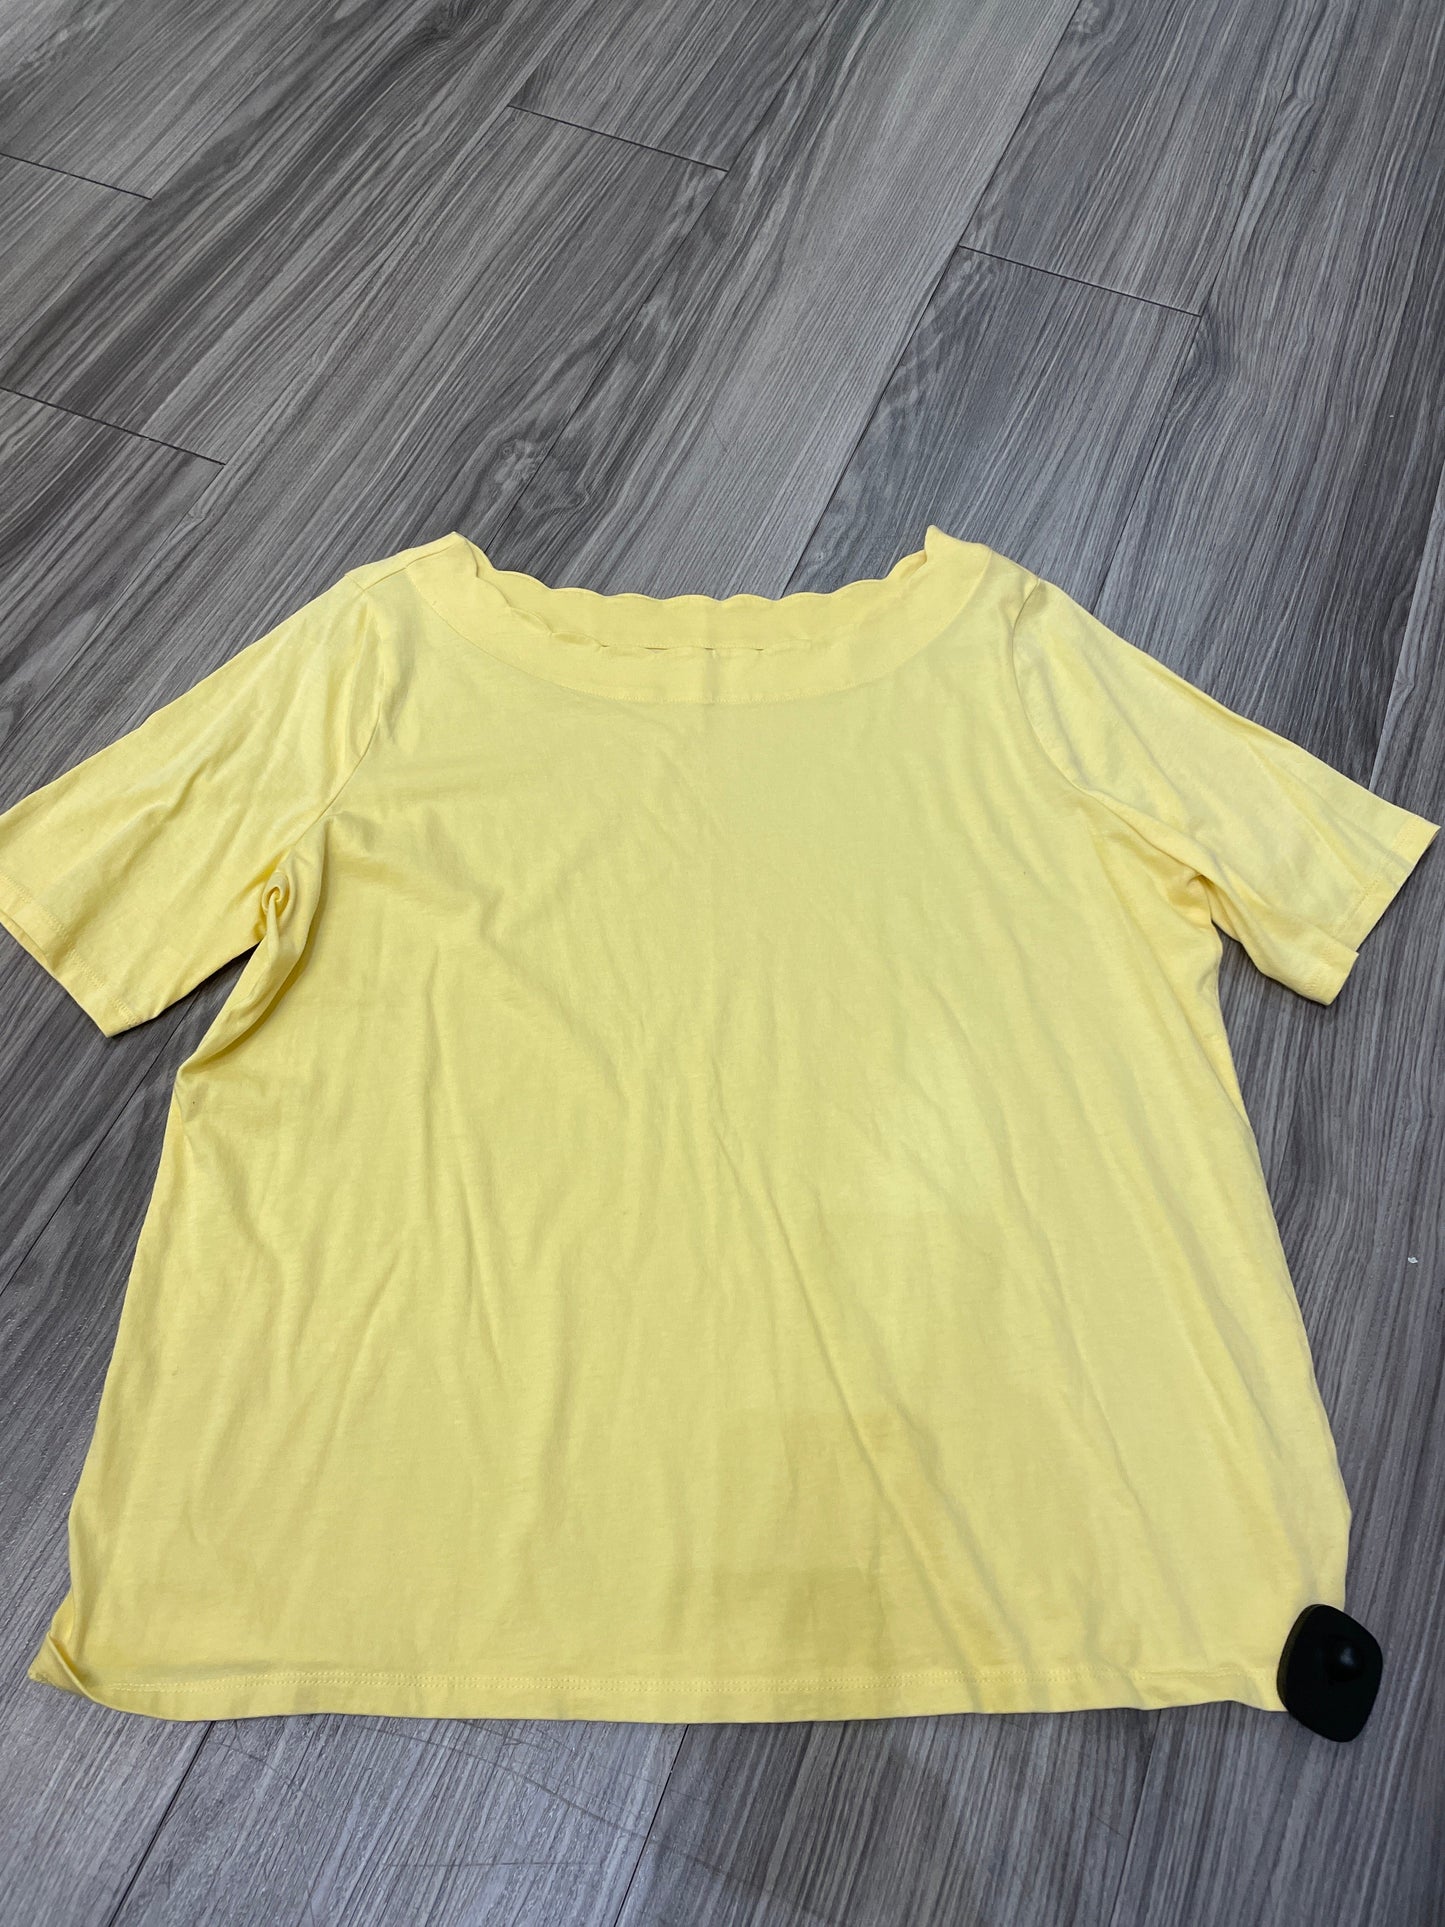 Yellow Top Short Sleeve Talbots, Size 1x